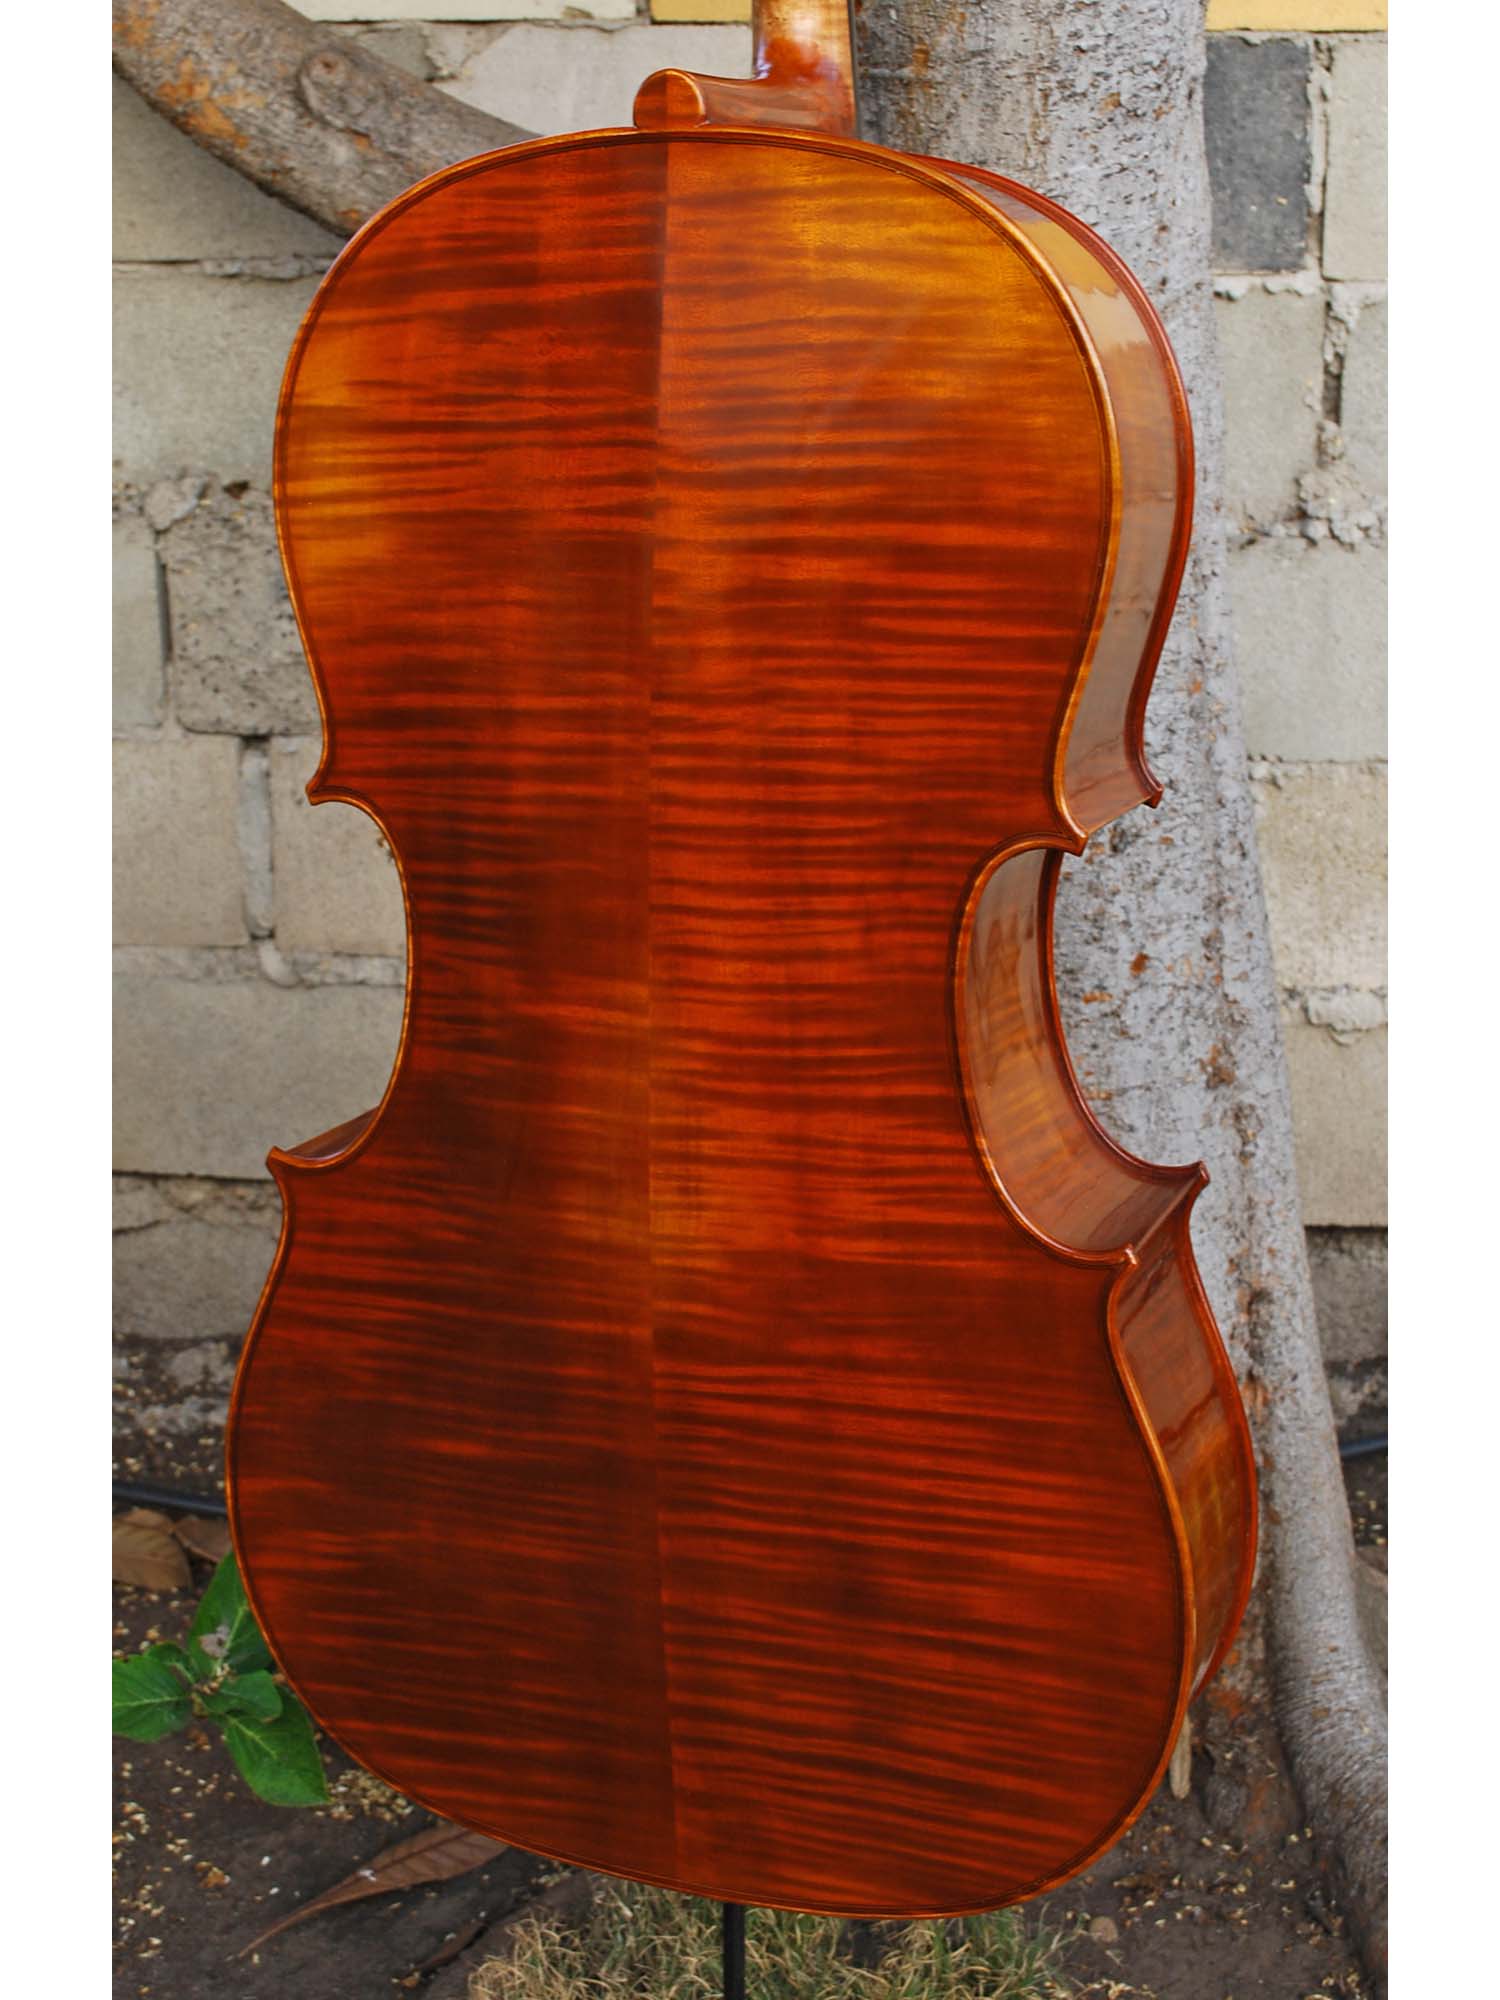 C.L. Wynn 520 'Rogeri' 4/4 Cello